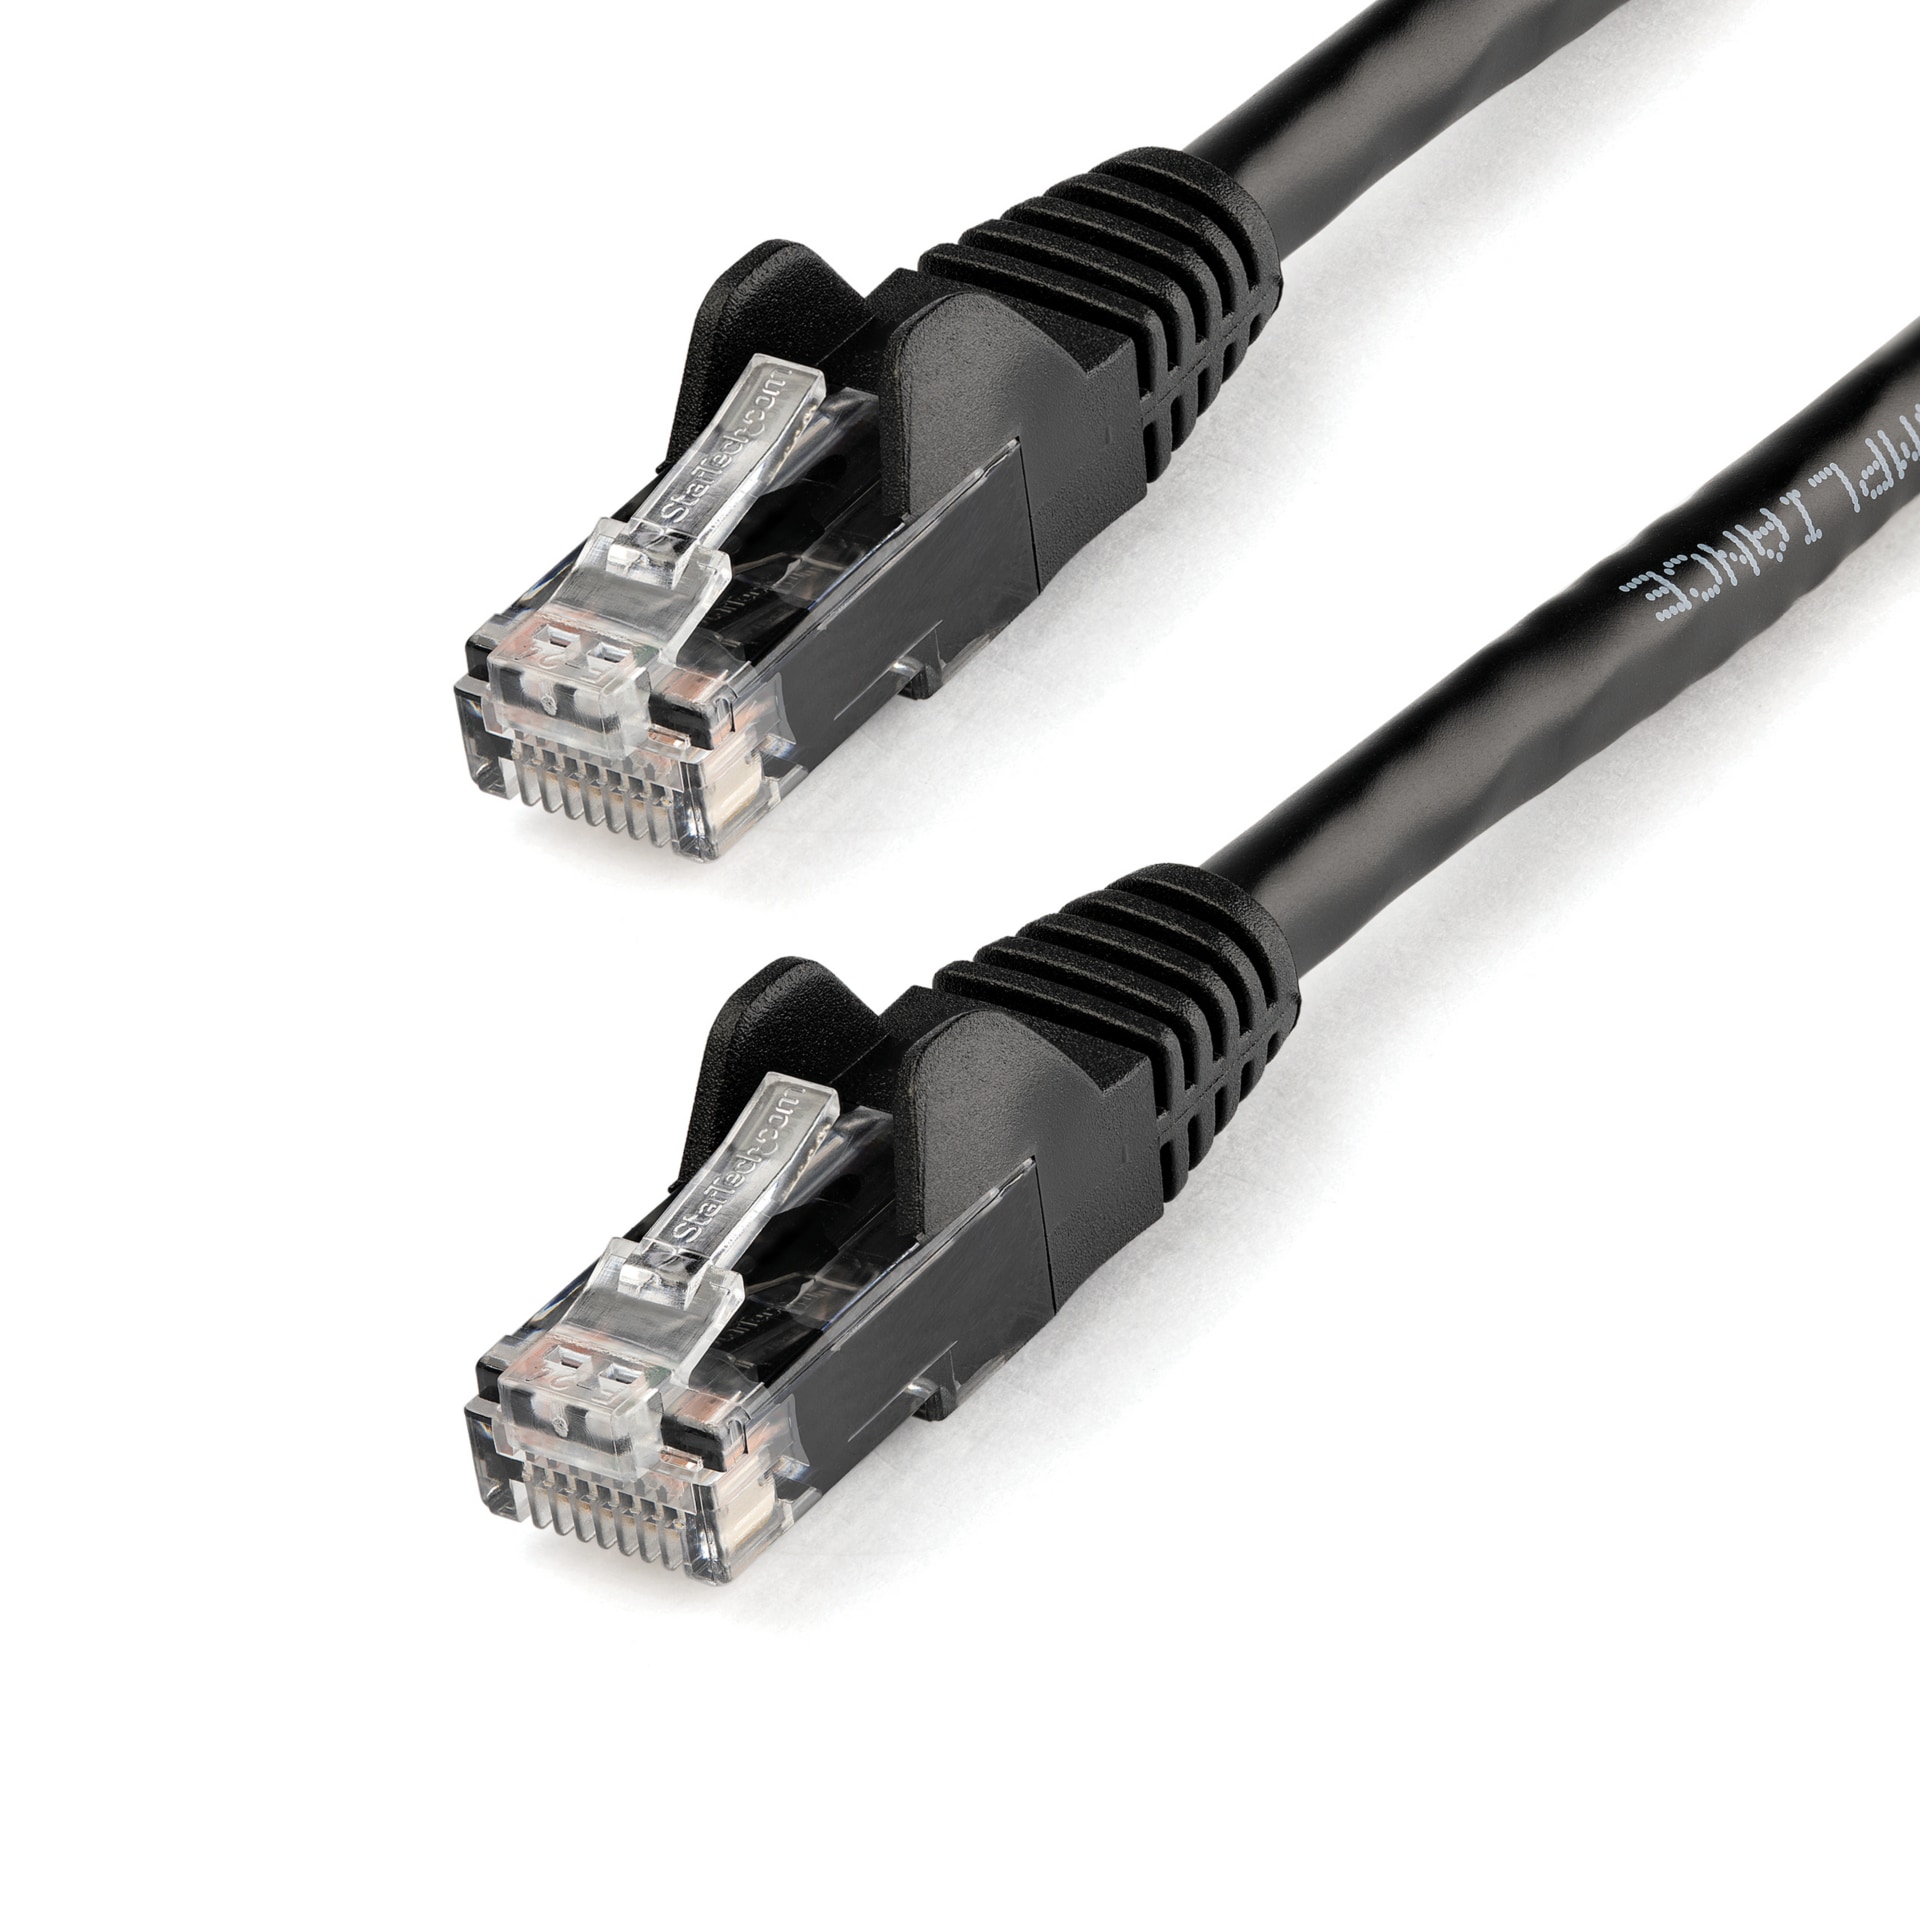 StarTech.com 100ft CAT6 Ethernet Cable Black Snagless UTP CAT 6 Gigabit Cord/Wire 100W PoE 650MHz